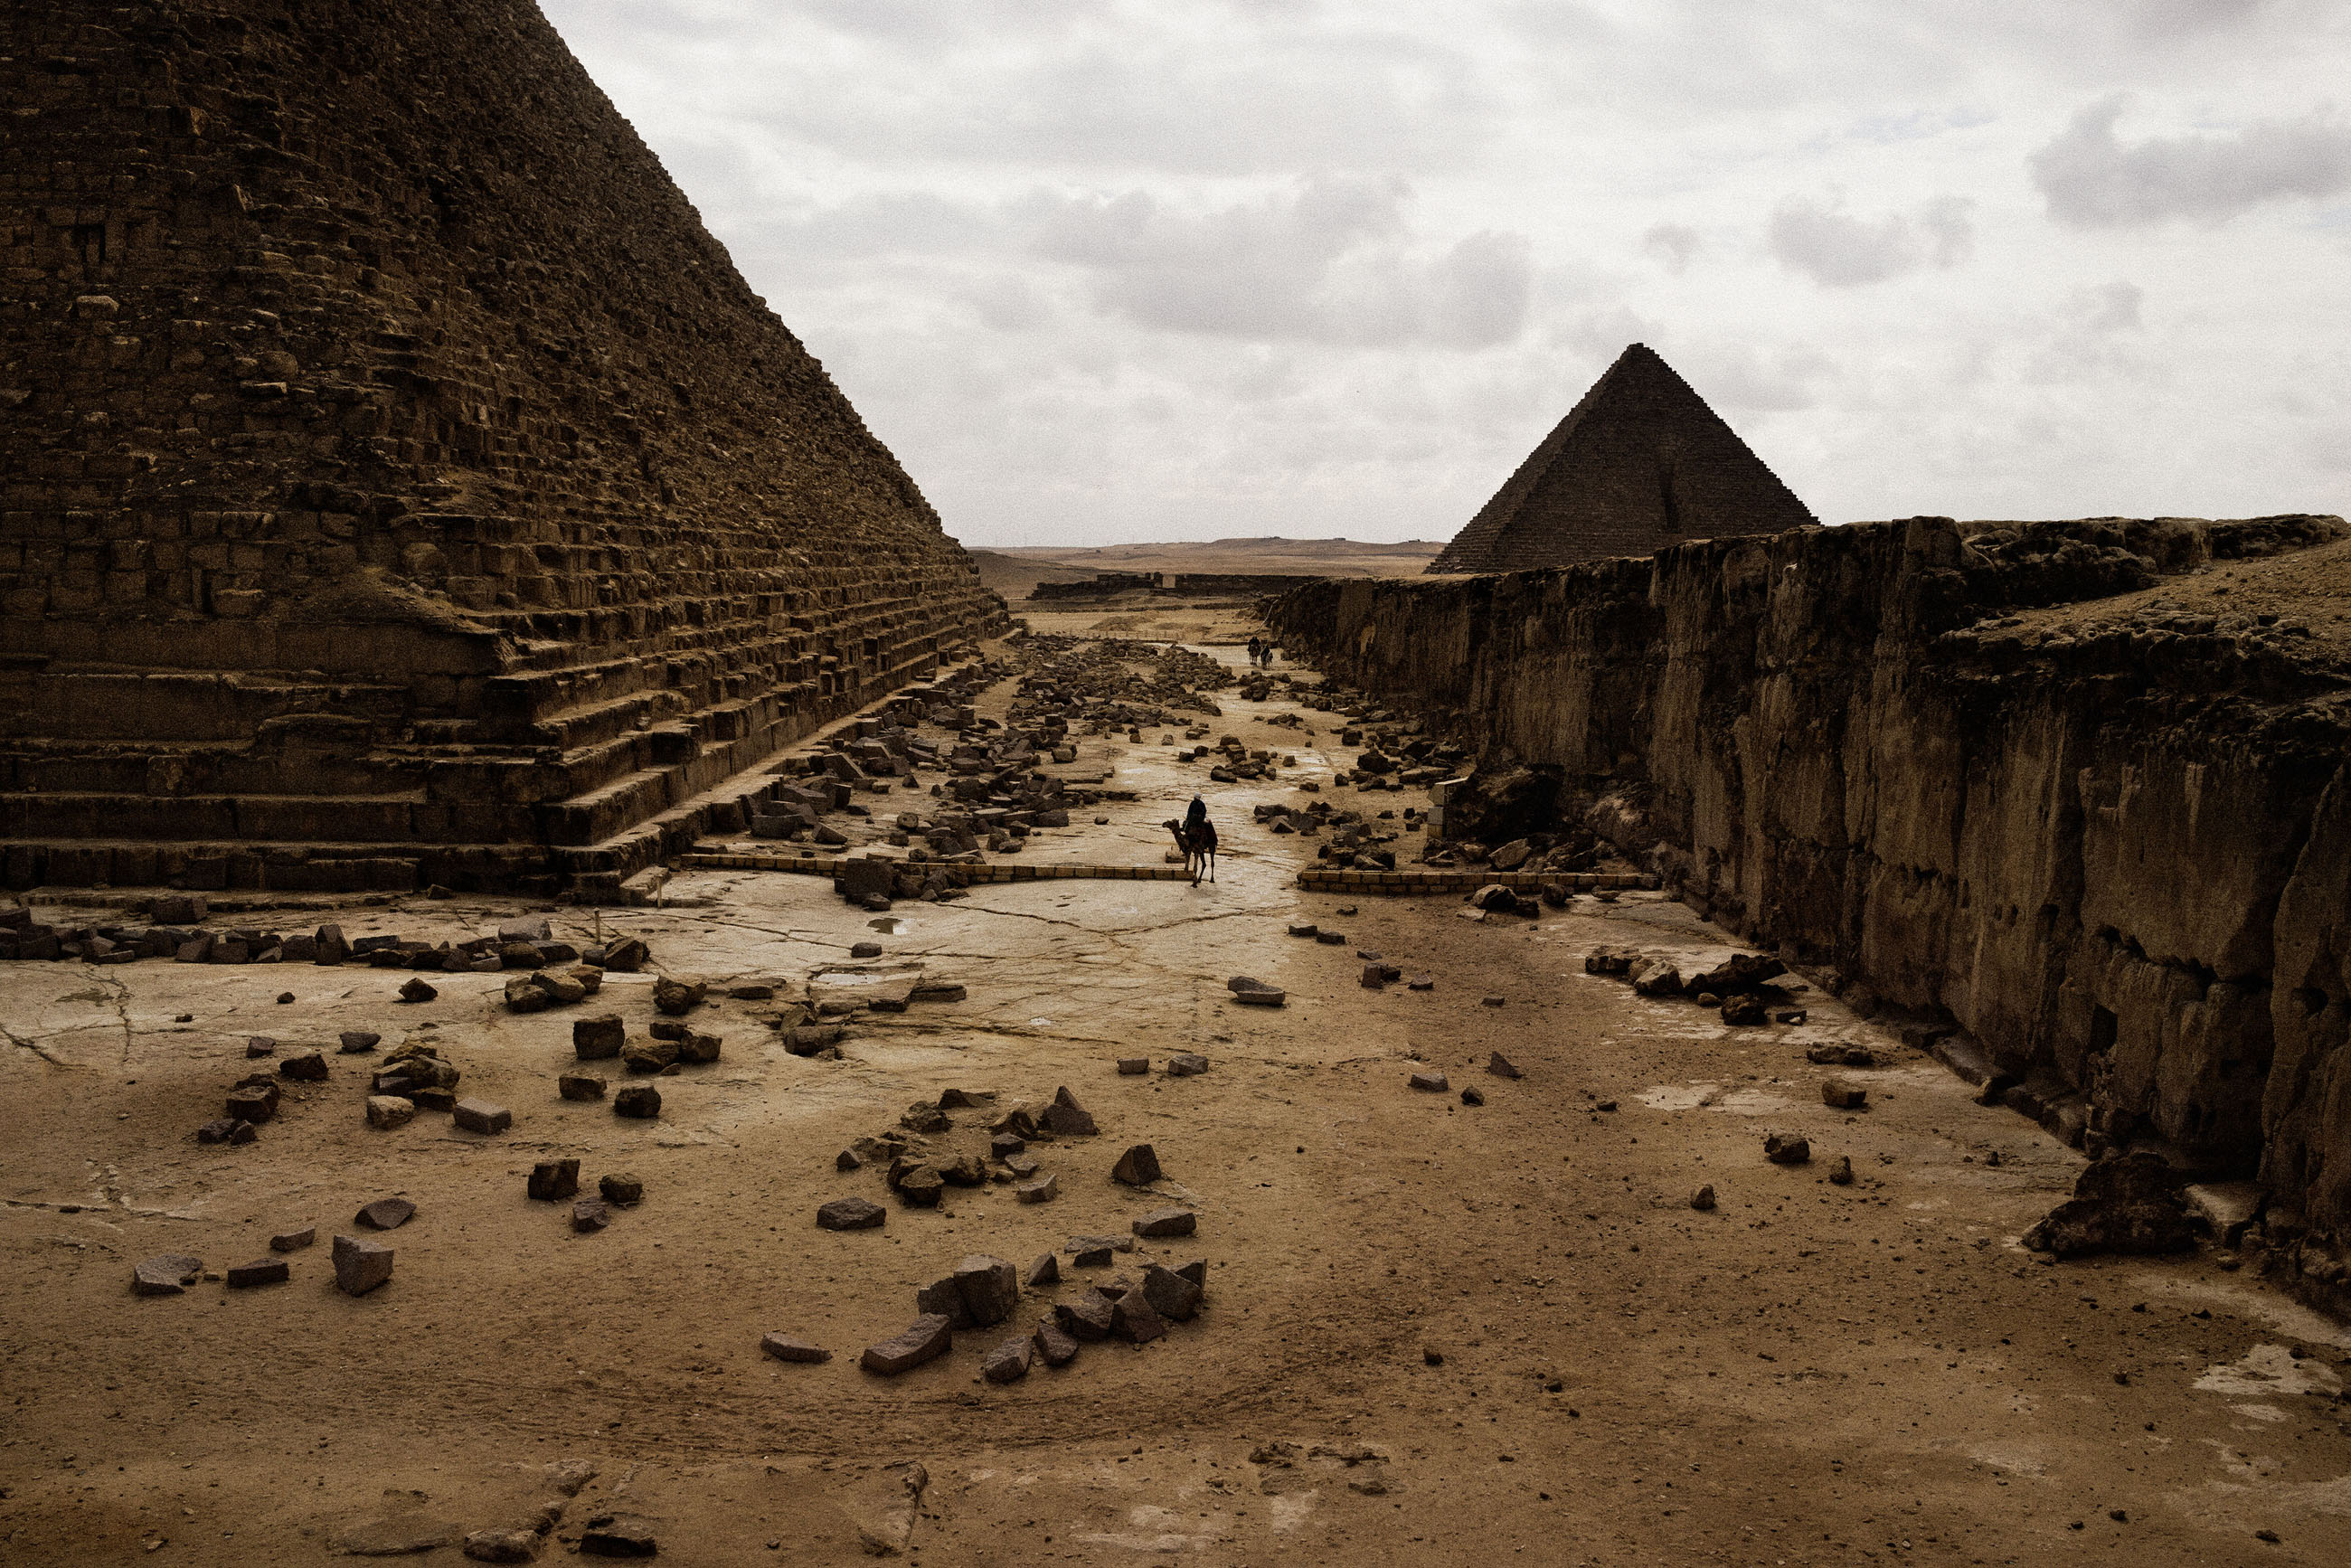 The Pyramids of Giza. Cairo, Egypt. 2013.